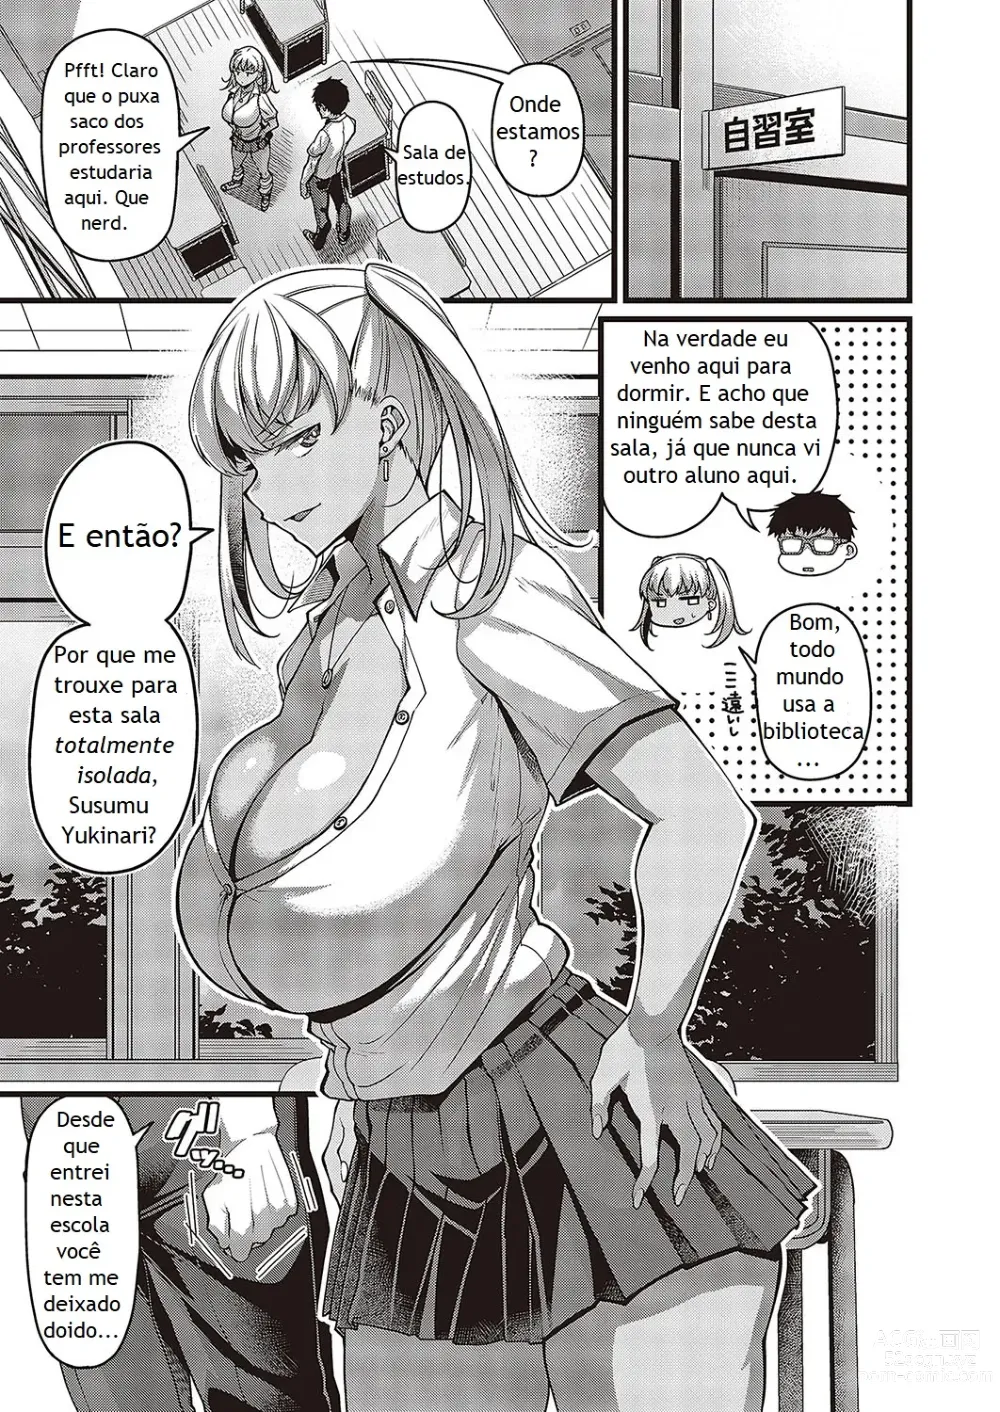 Page 3 of manga Way to Go!